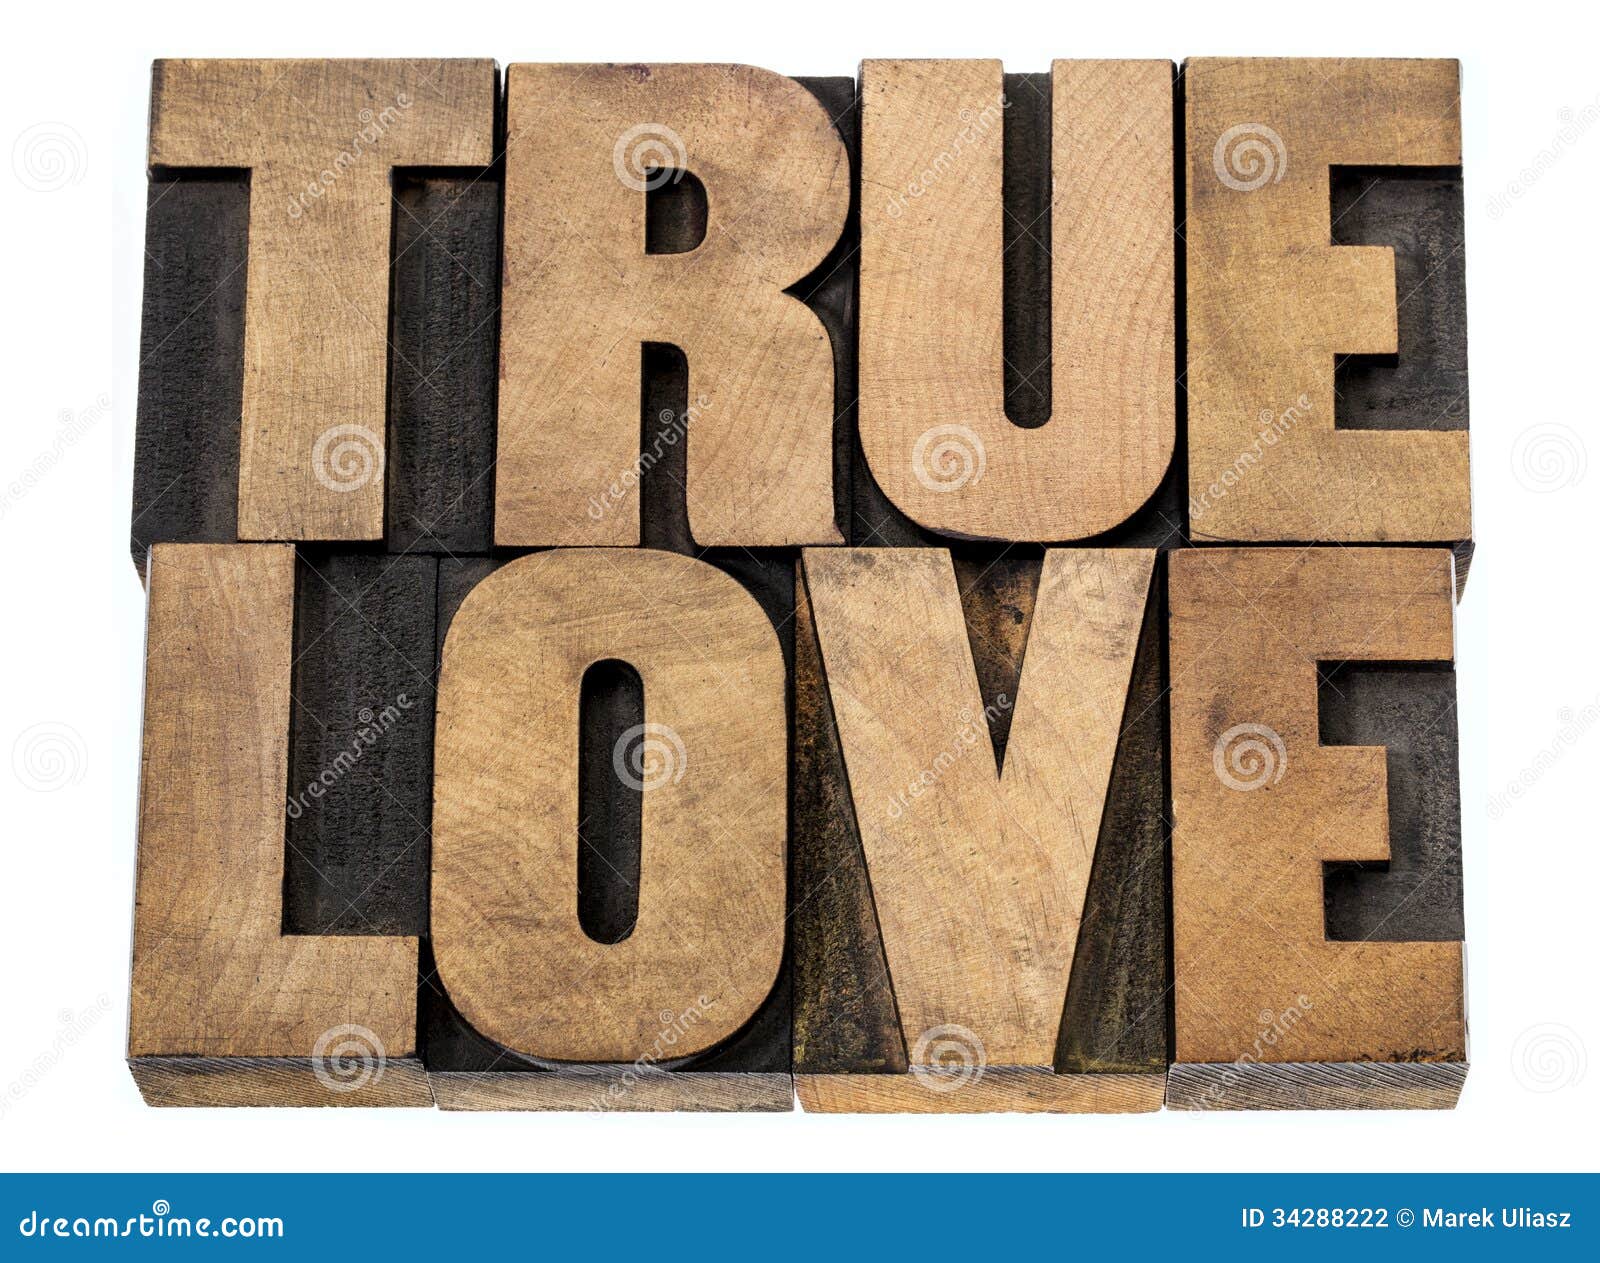 True Love Waits Image & Photo (Free Trial)